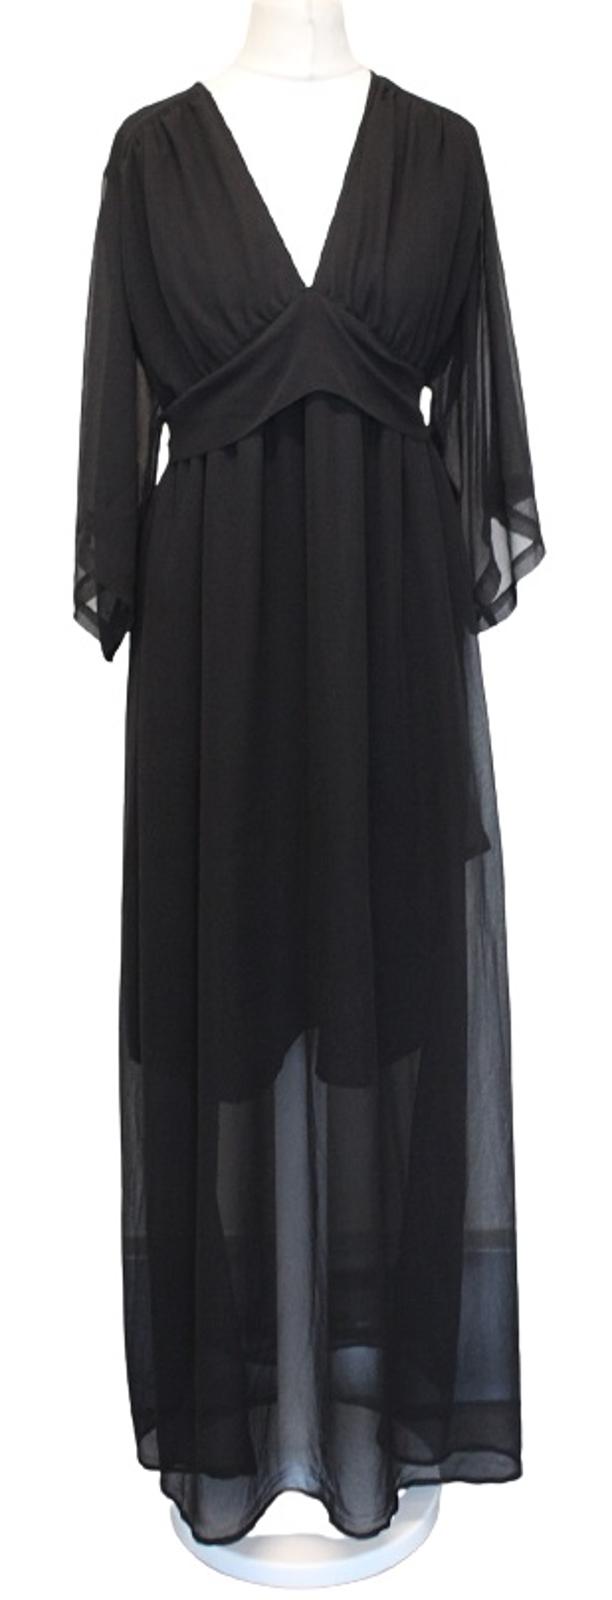 ATTERLEY ROAD Ladies Black V-Neck Tie Back Semi-Sheer Occasion Maxi Dress UK12